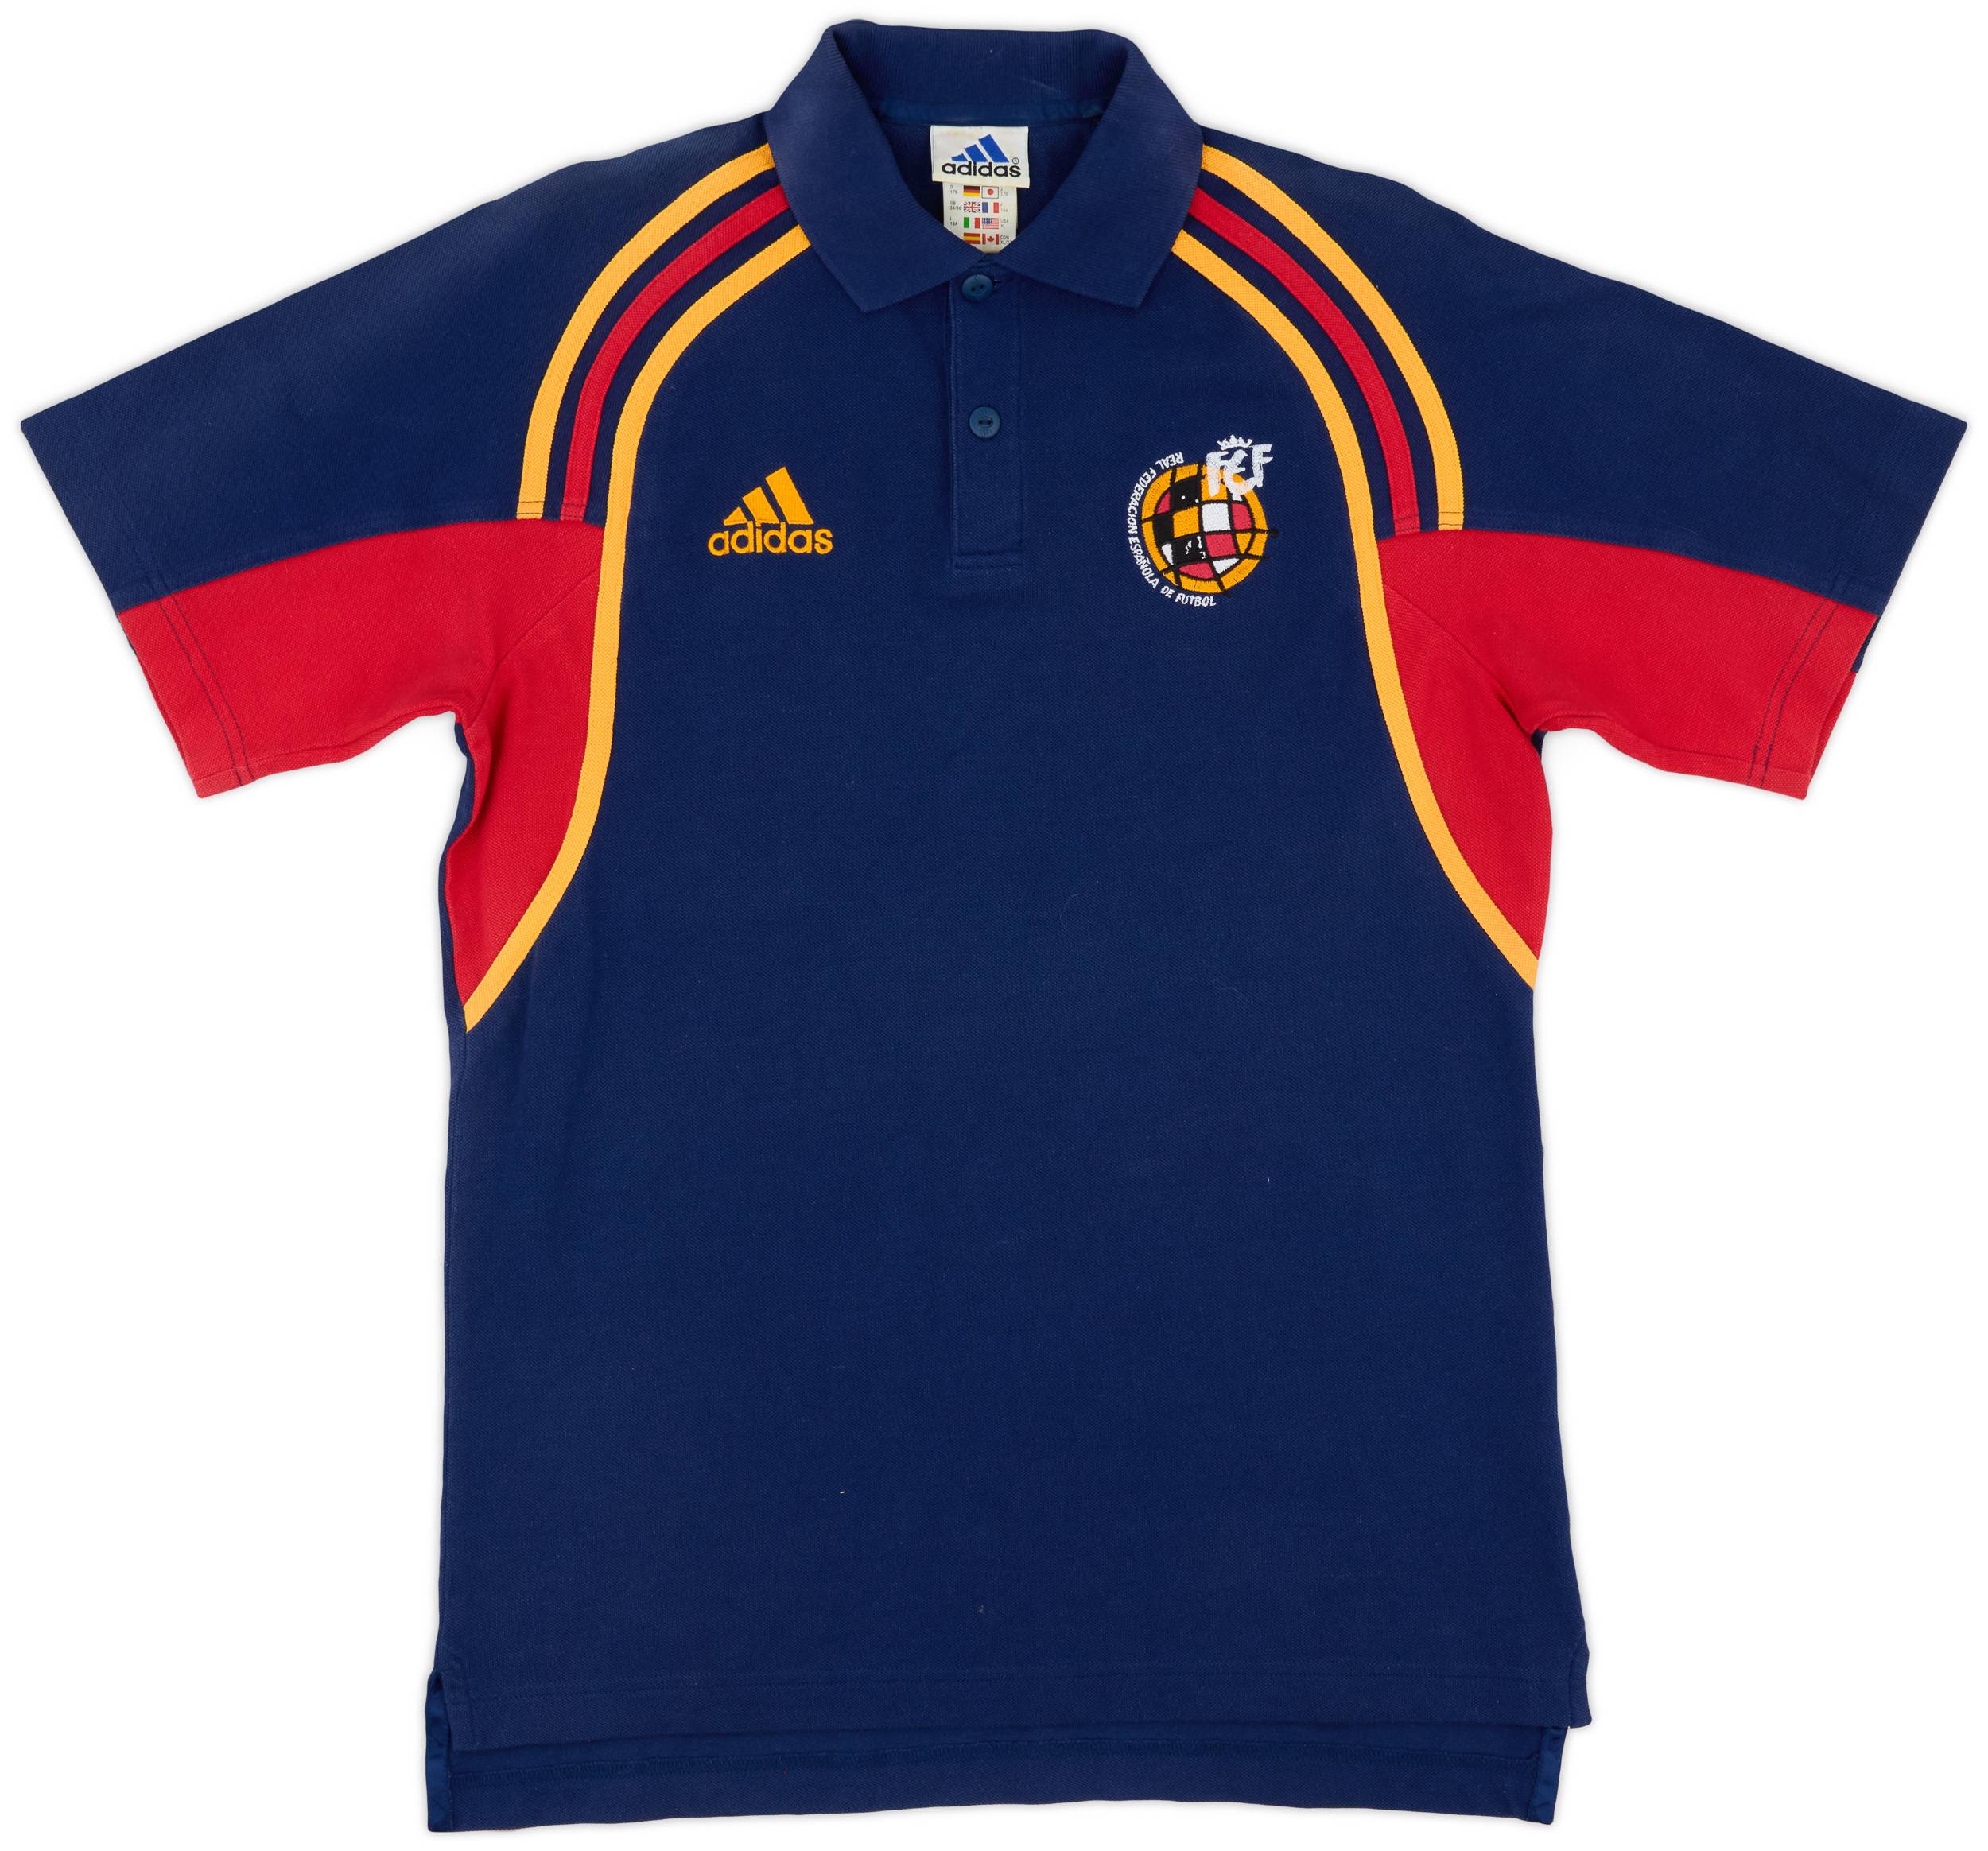 2000-02 Spain adidas Polo Shirt